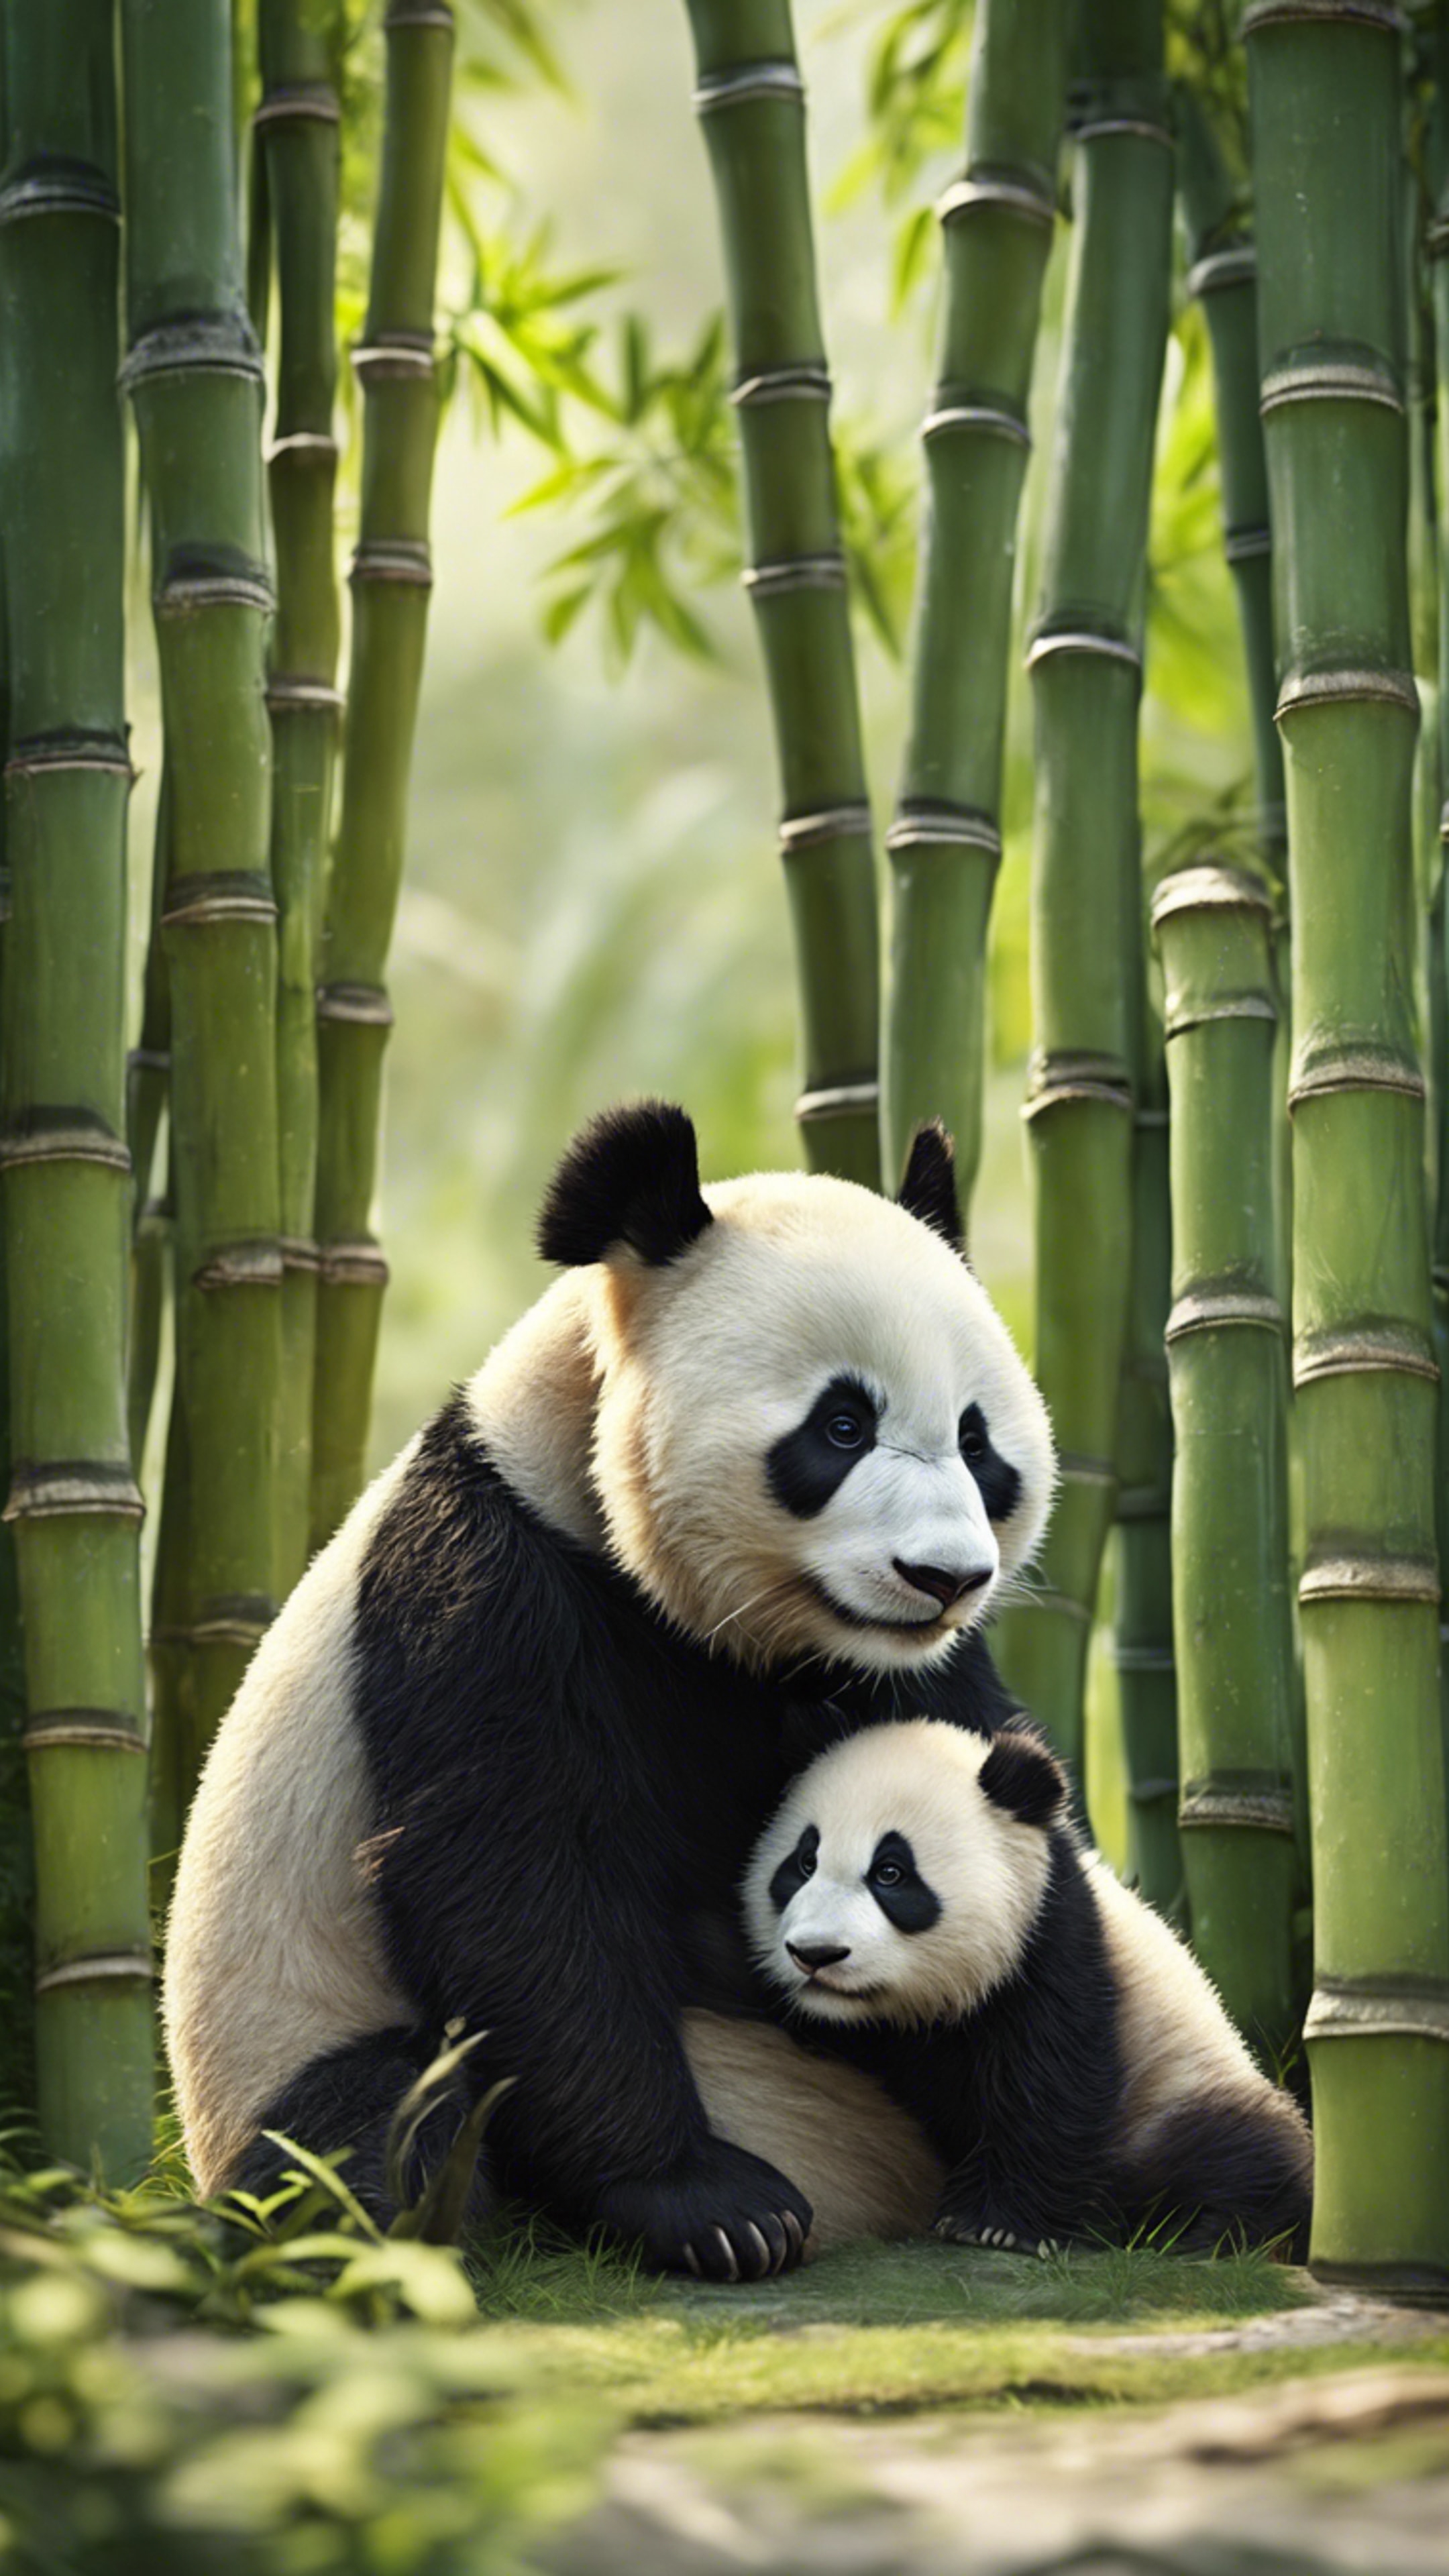 A mother panda teaching her cub to climb a bamboo tree in a tranquil jungle setting. Tapeta[bf956daca53d4d23a107]